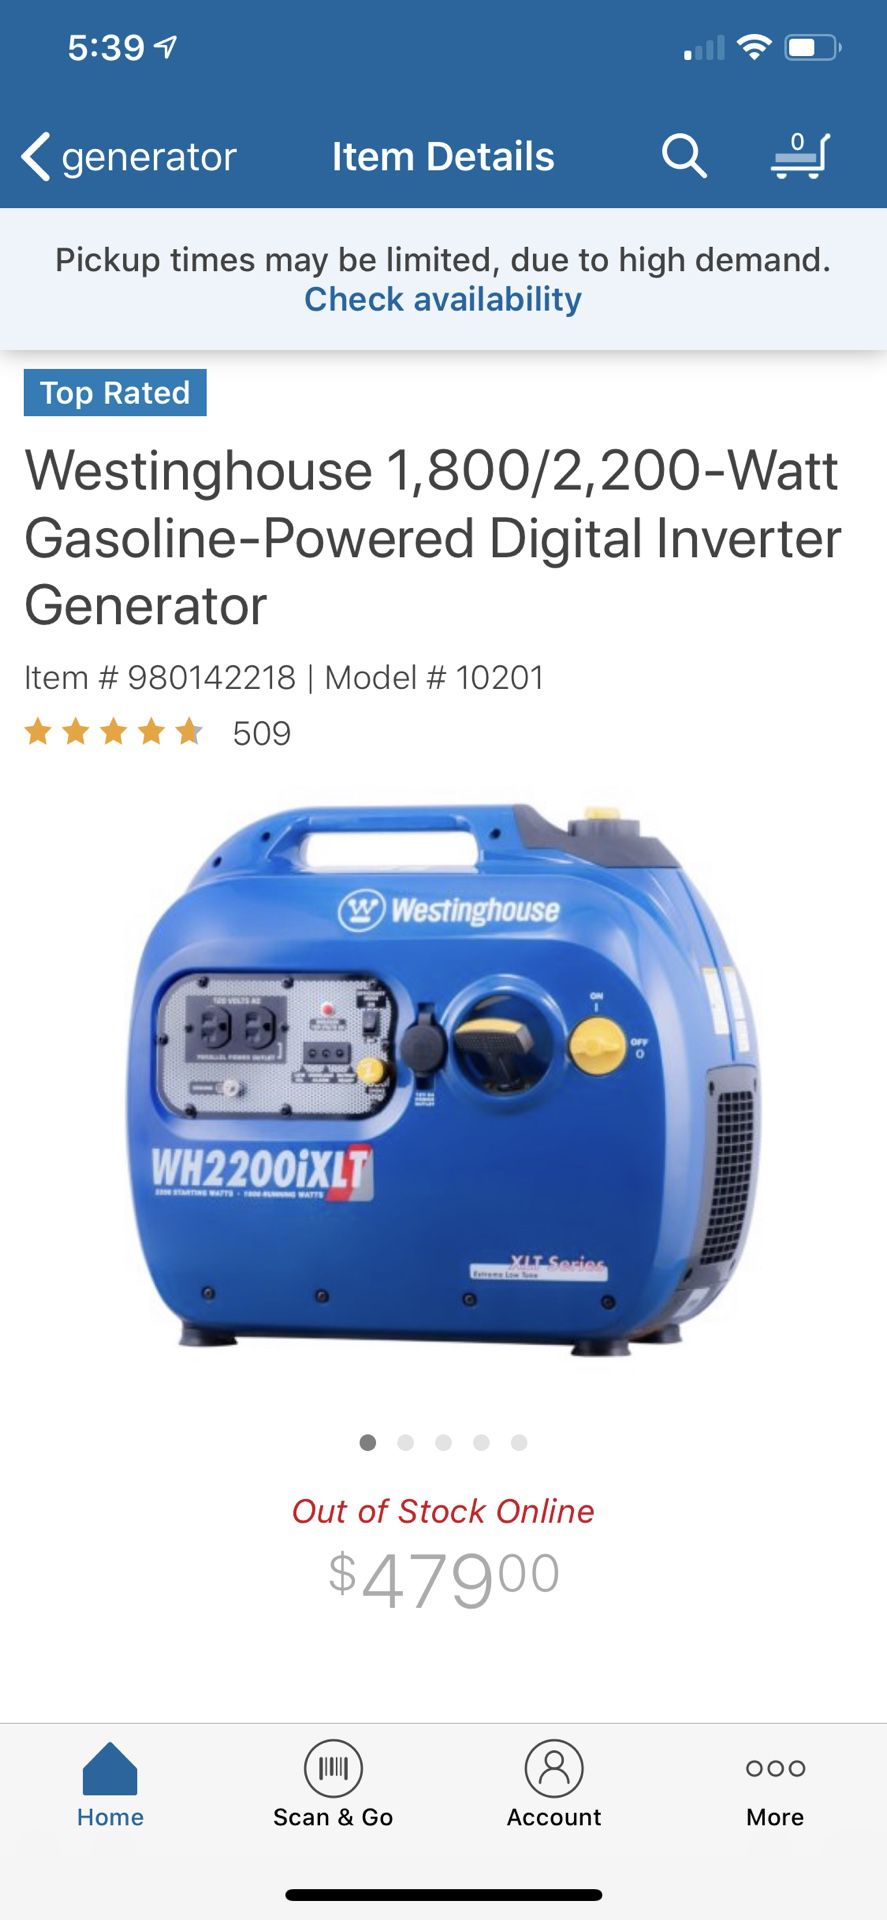 Westinghouse Gas-Powered Digital Inverter Generator